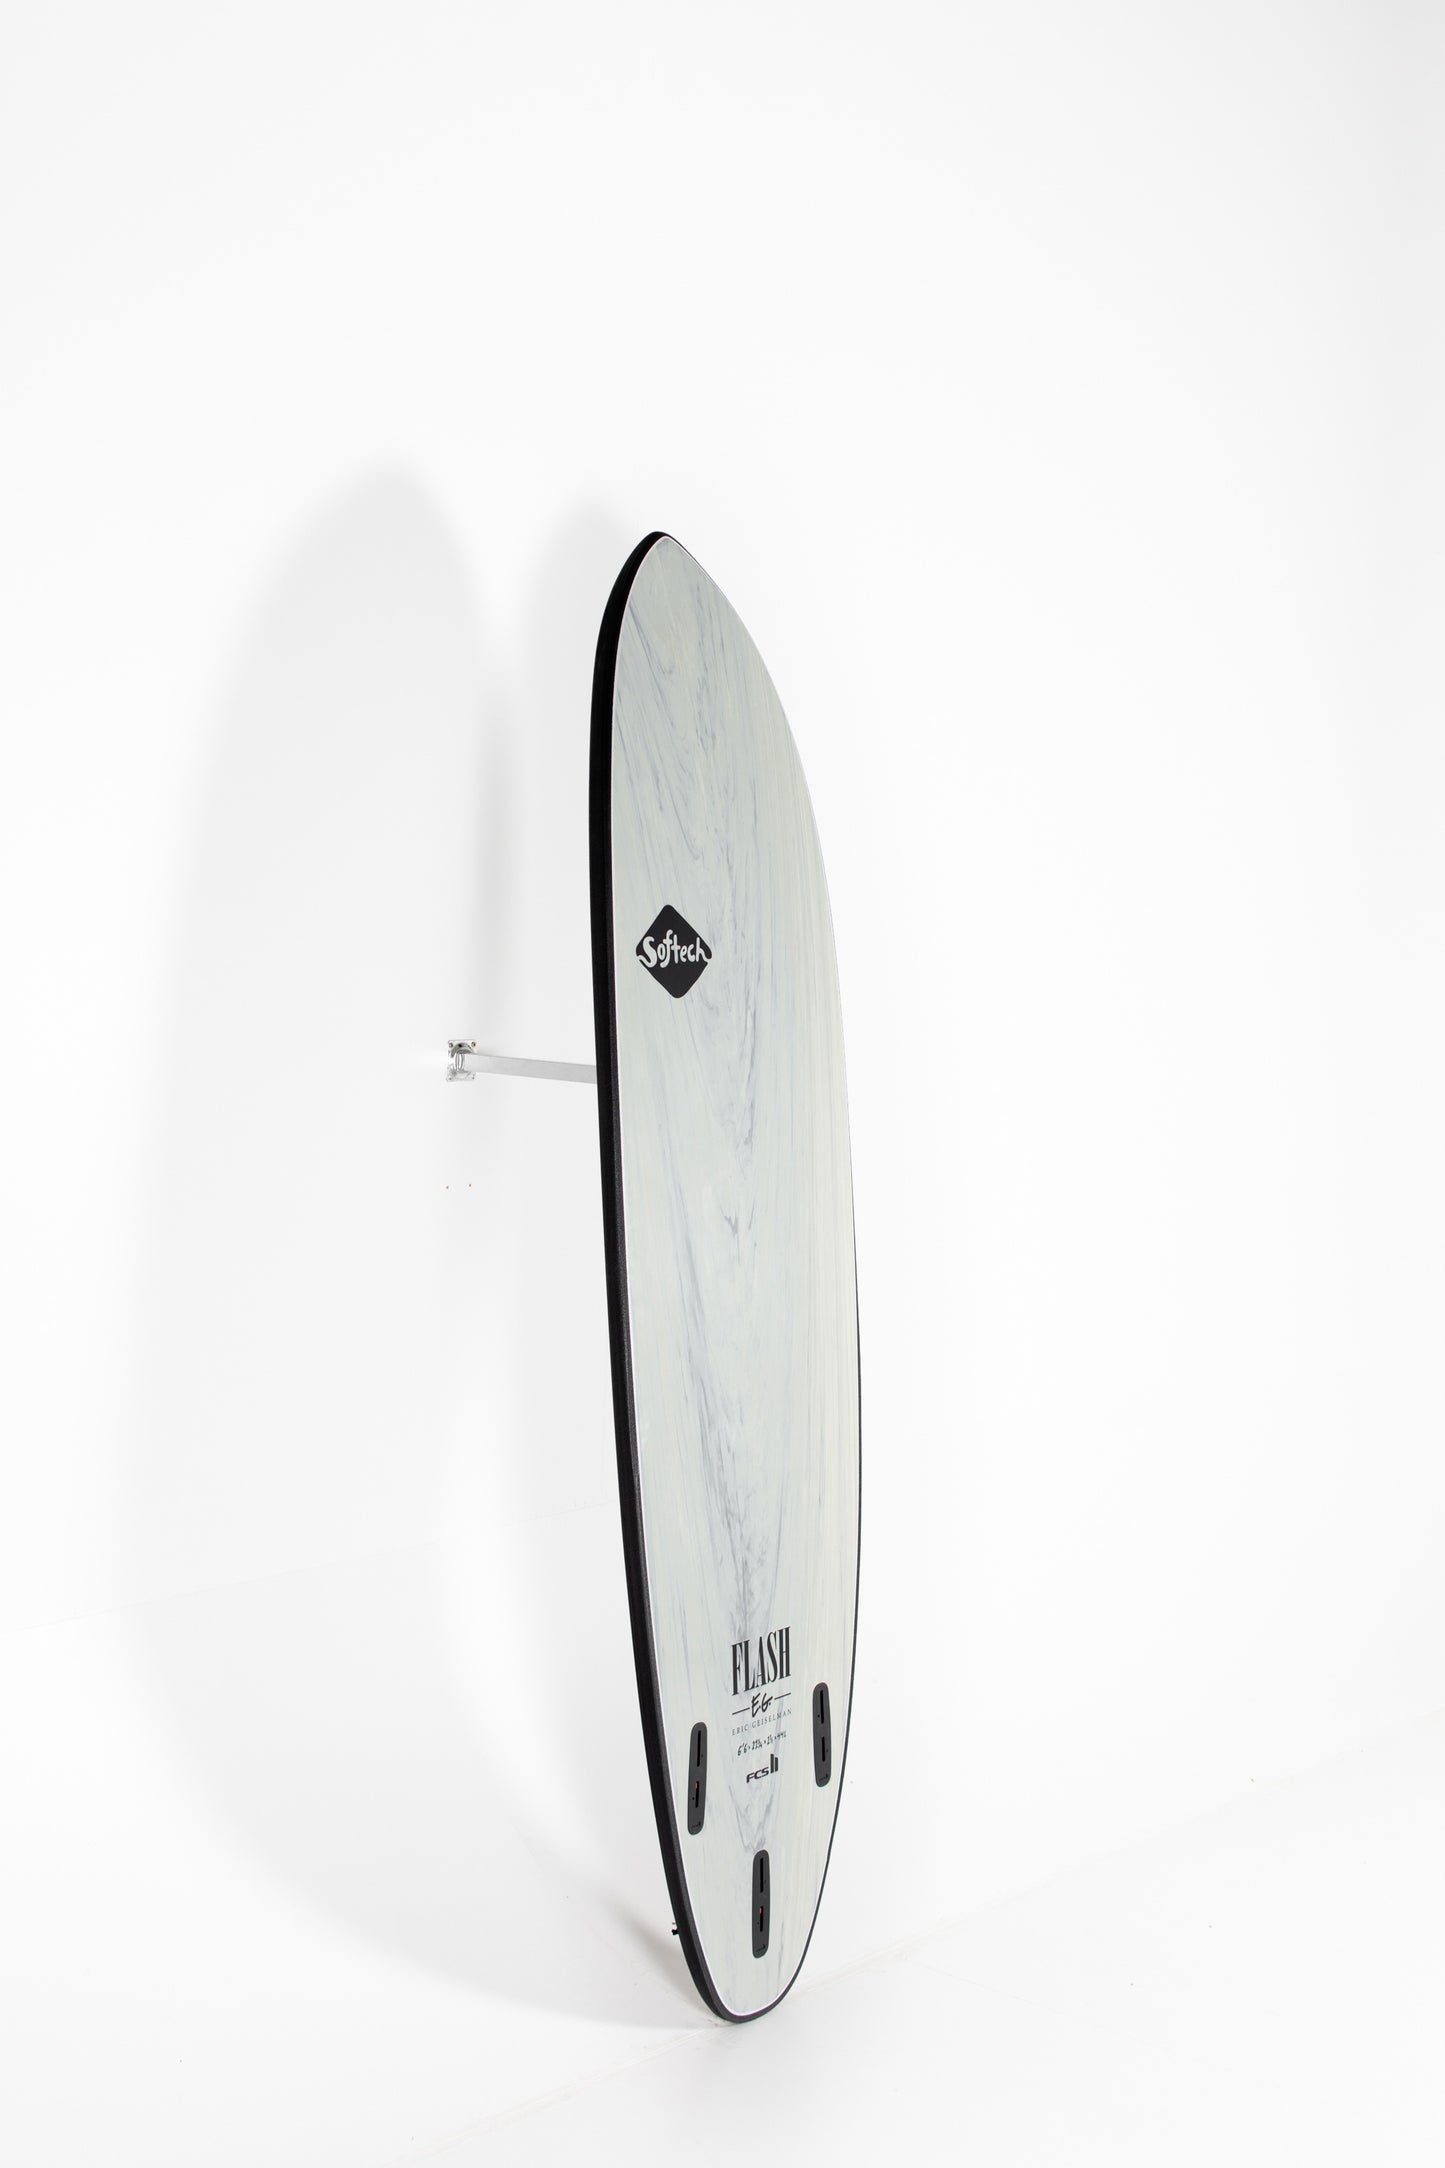 
                  
                    Pukas Surf Shop - SOFTECH - FLASH ERIC GEISELMAN 6'6"
                  
                